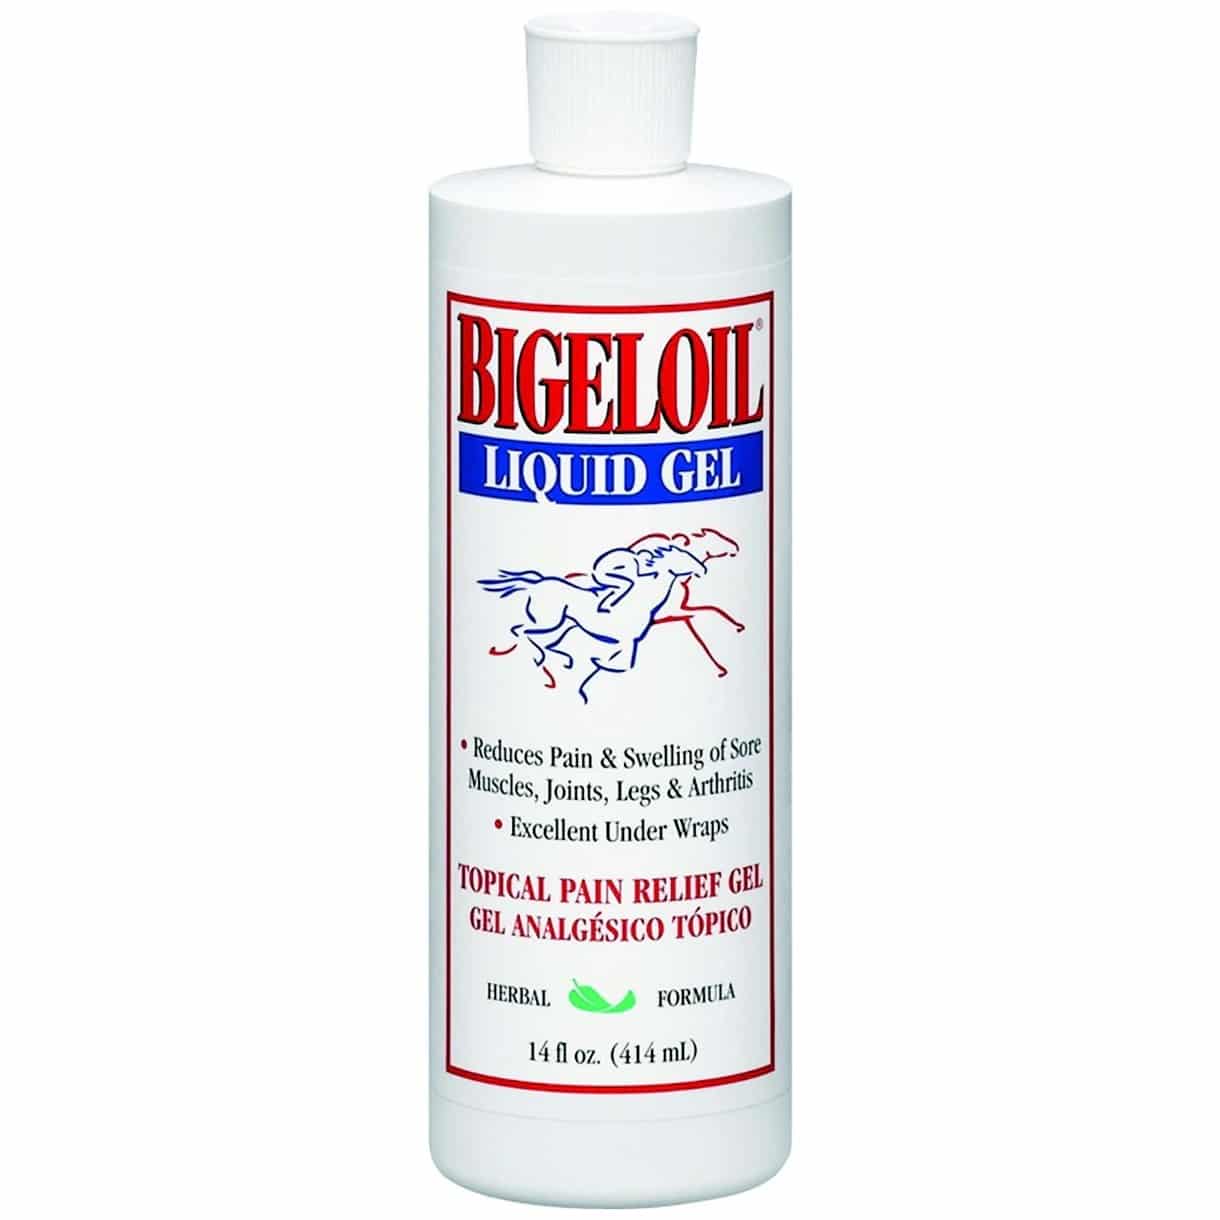 Absorbine Bigeloil Sore Muscle & Joint Pain Relief Horse Liniment Gel